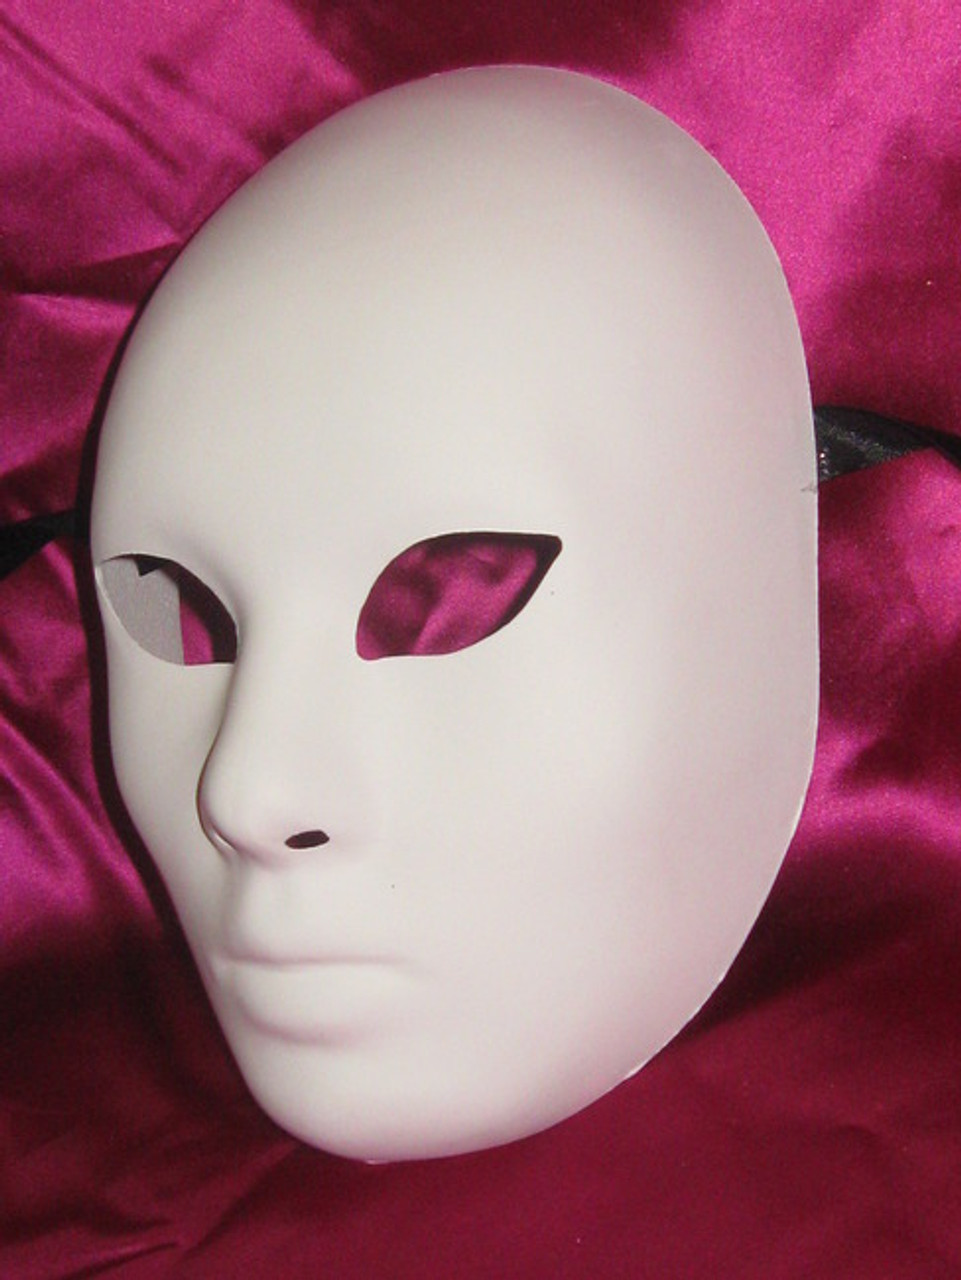 Rondine Grezzo - Blank White Masks for Decorating